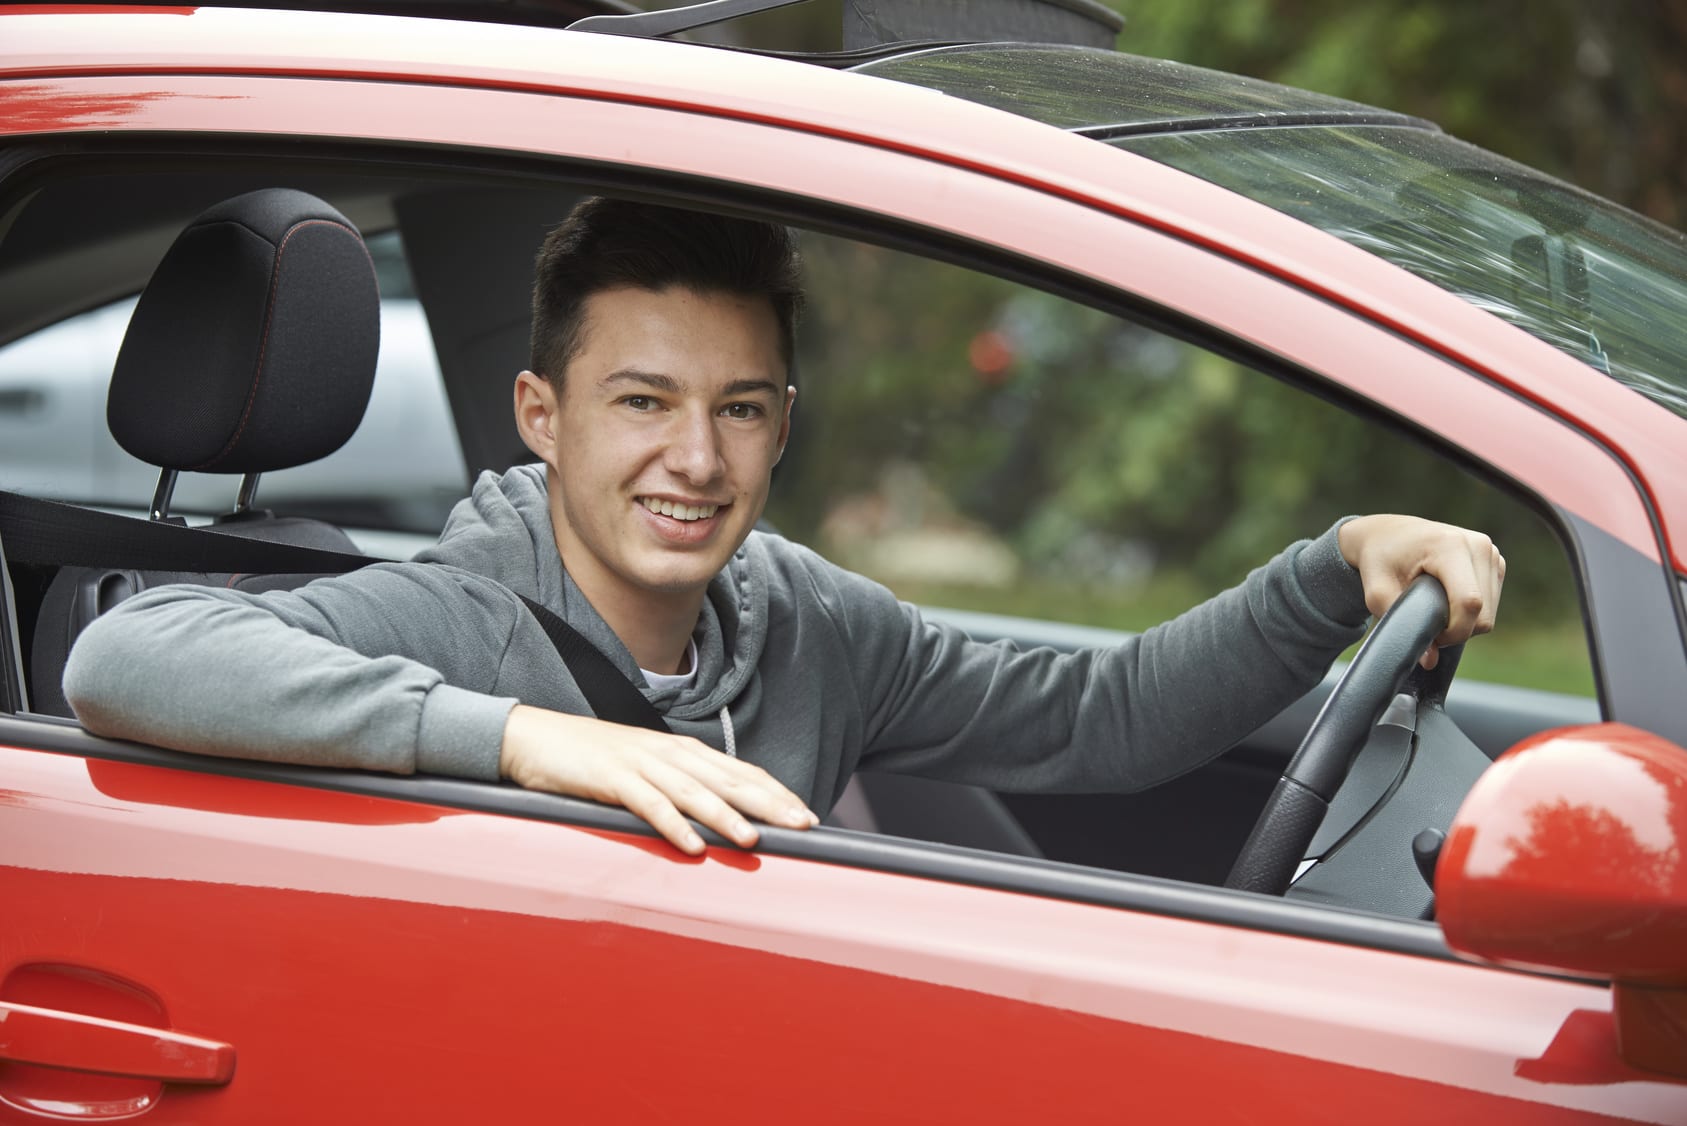 Car Insurance for Teens